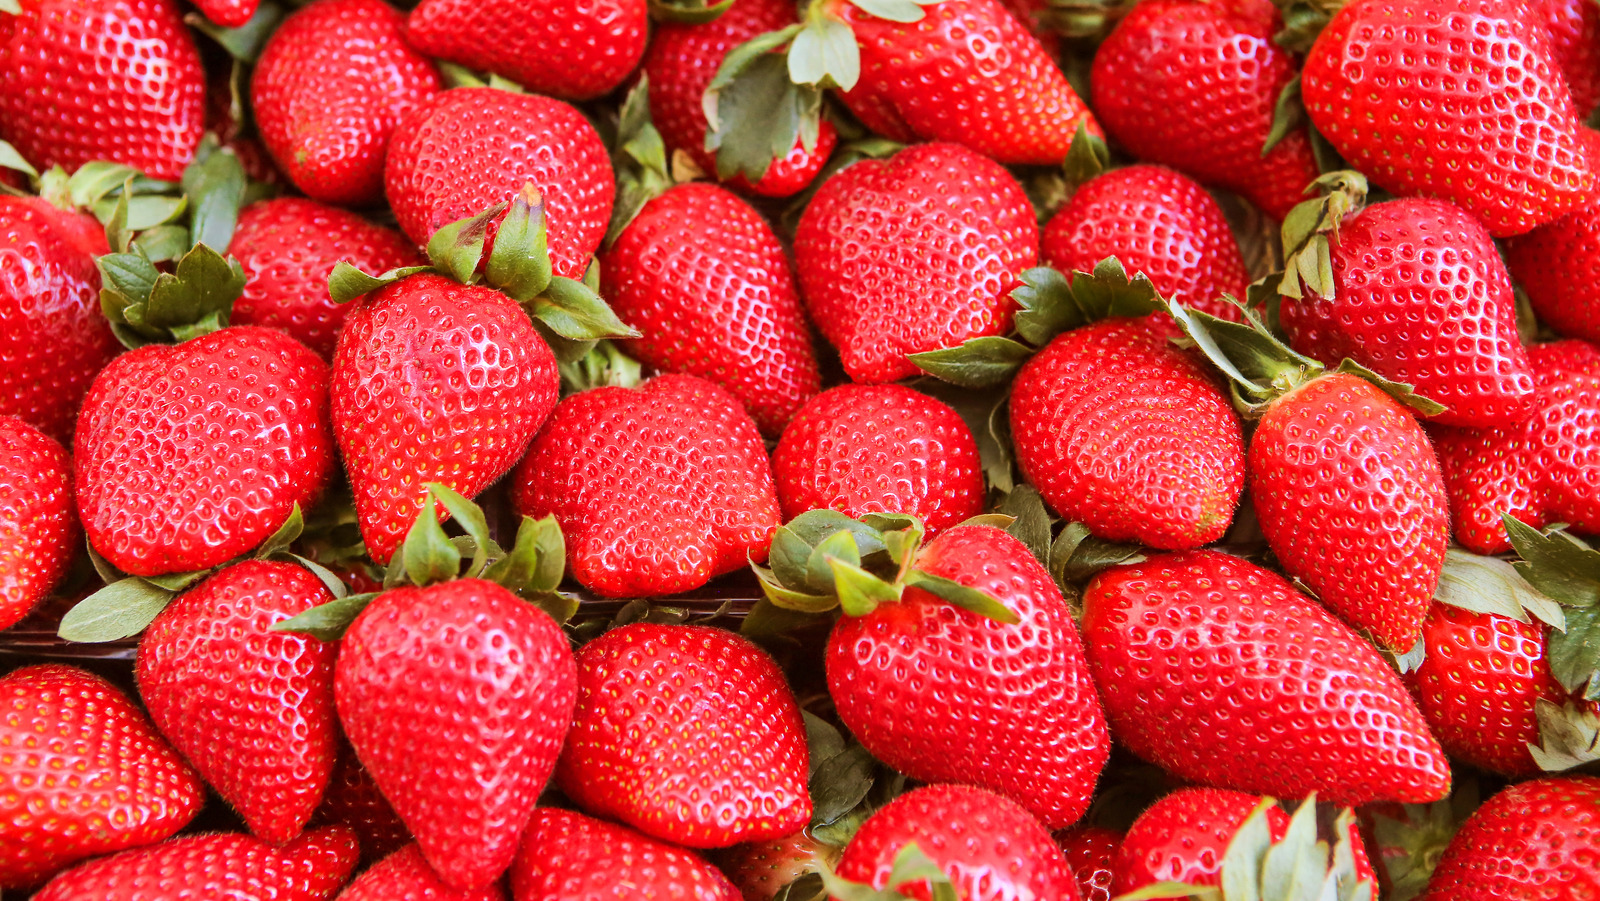 https://www.tastingtable.com/img/gallery/the-best-ways-to-keep-strawberries-fresh/l-intro-1642800869.jpg